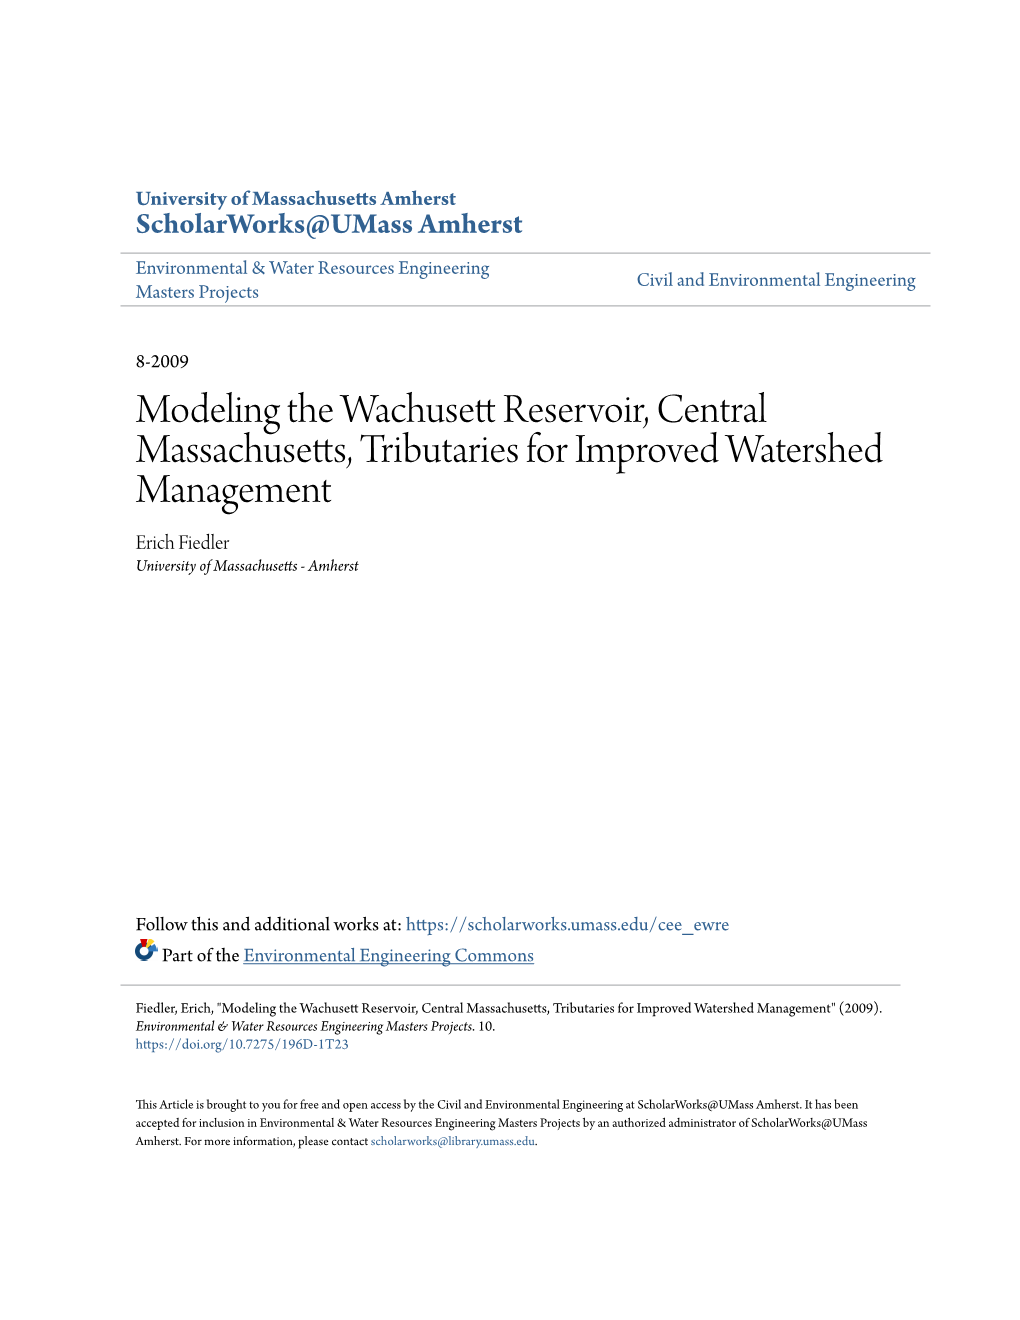 Modeling the Wachusett Reservoir, Central Massachusetts, Tributaries for Improved Watershed Management Erich Fiedler University of Massachusetts - Amherst